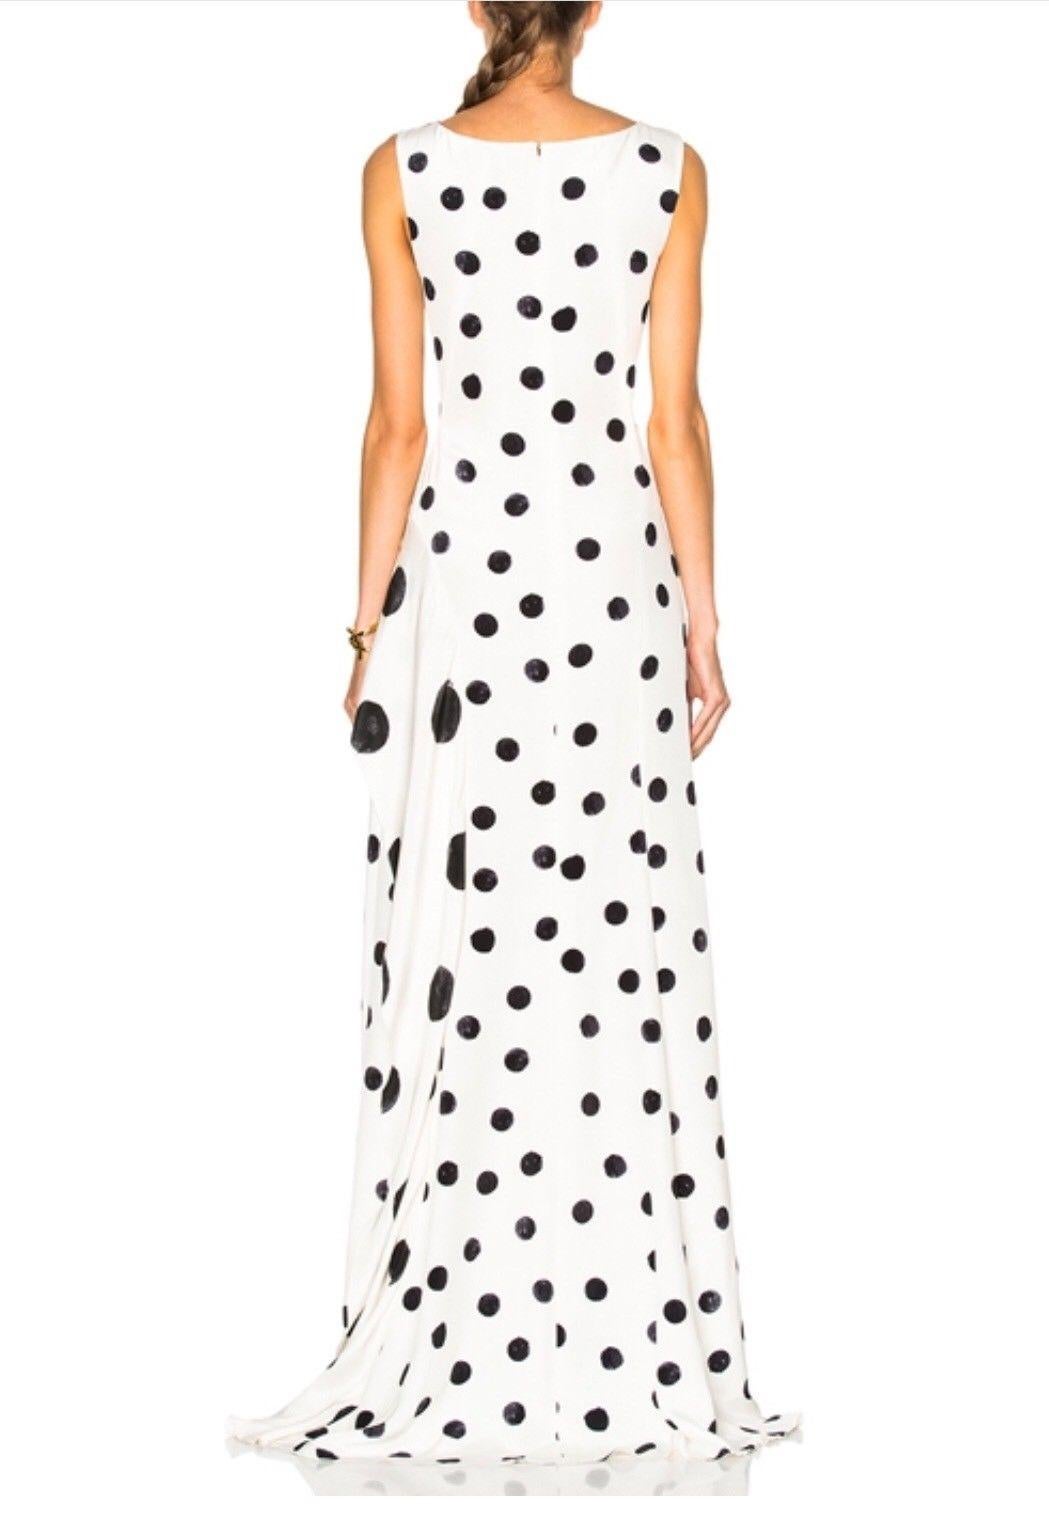 New Oscar De La Renta White Polka Dot Silk Crepe Tiered Skirt Dress Gown size 4 For Sale 2